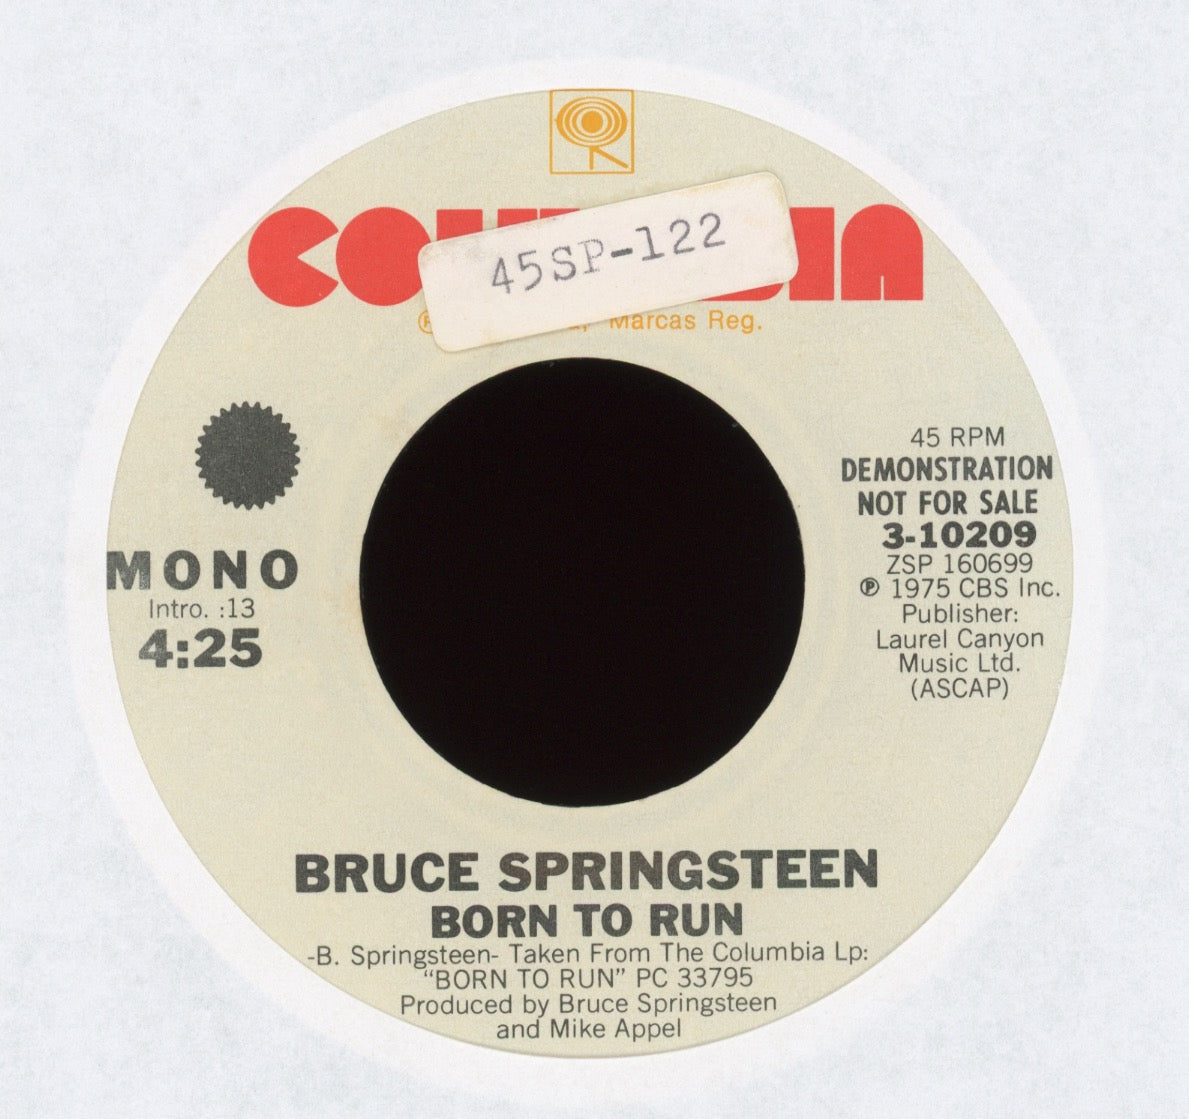 Bruce Springsteen - Born To Run on Columbia Promo